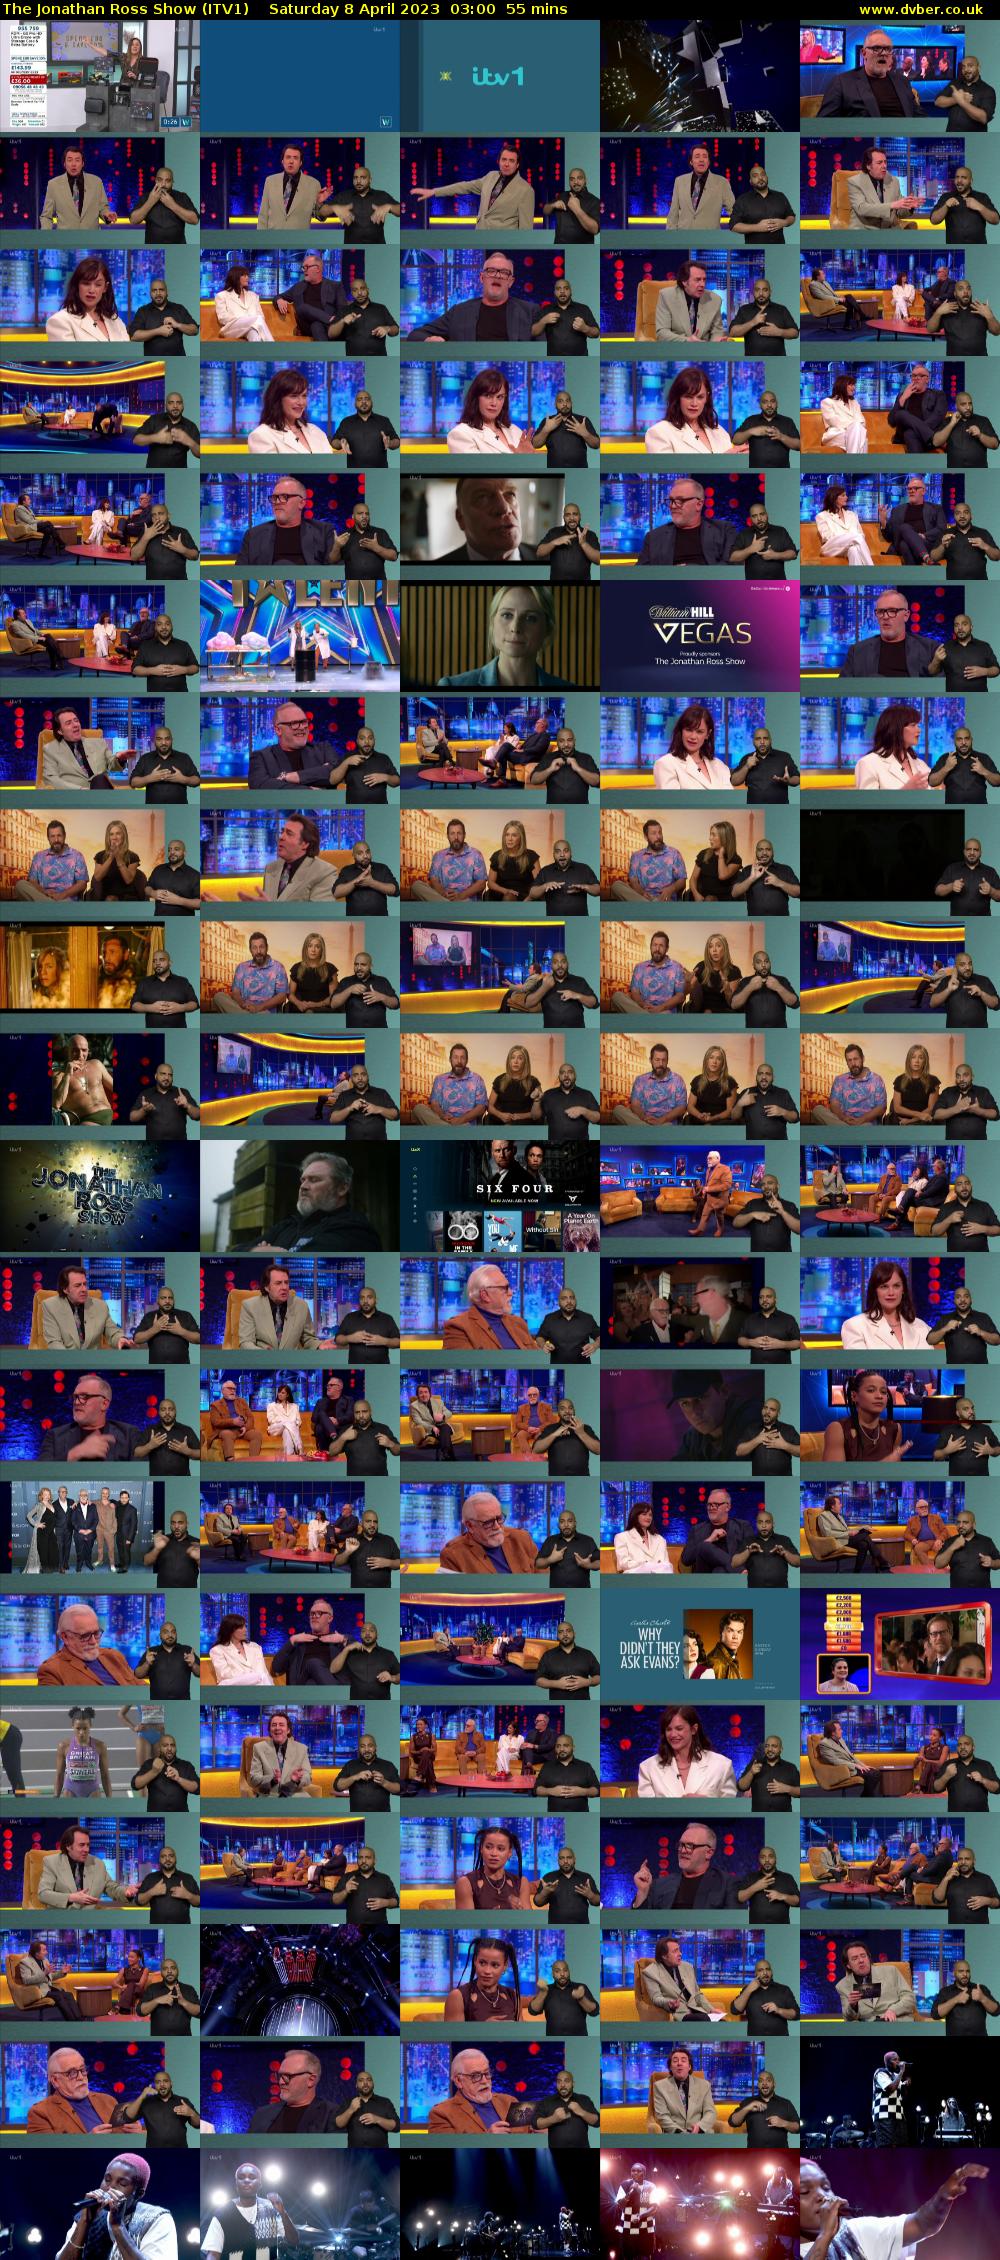 The Jonathan Ross Show (ITV1) Saturday 8 April 2023 03:00 - 03:55